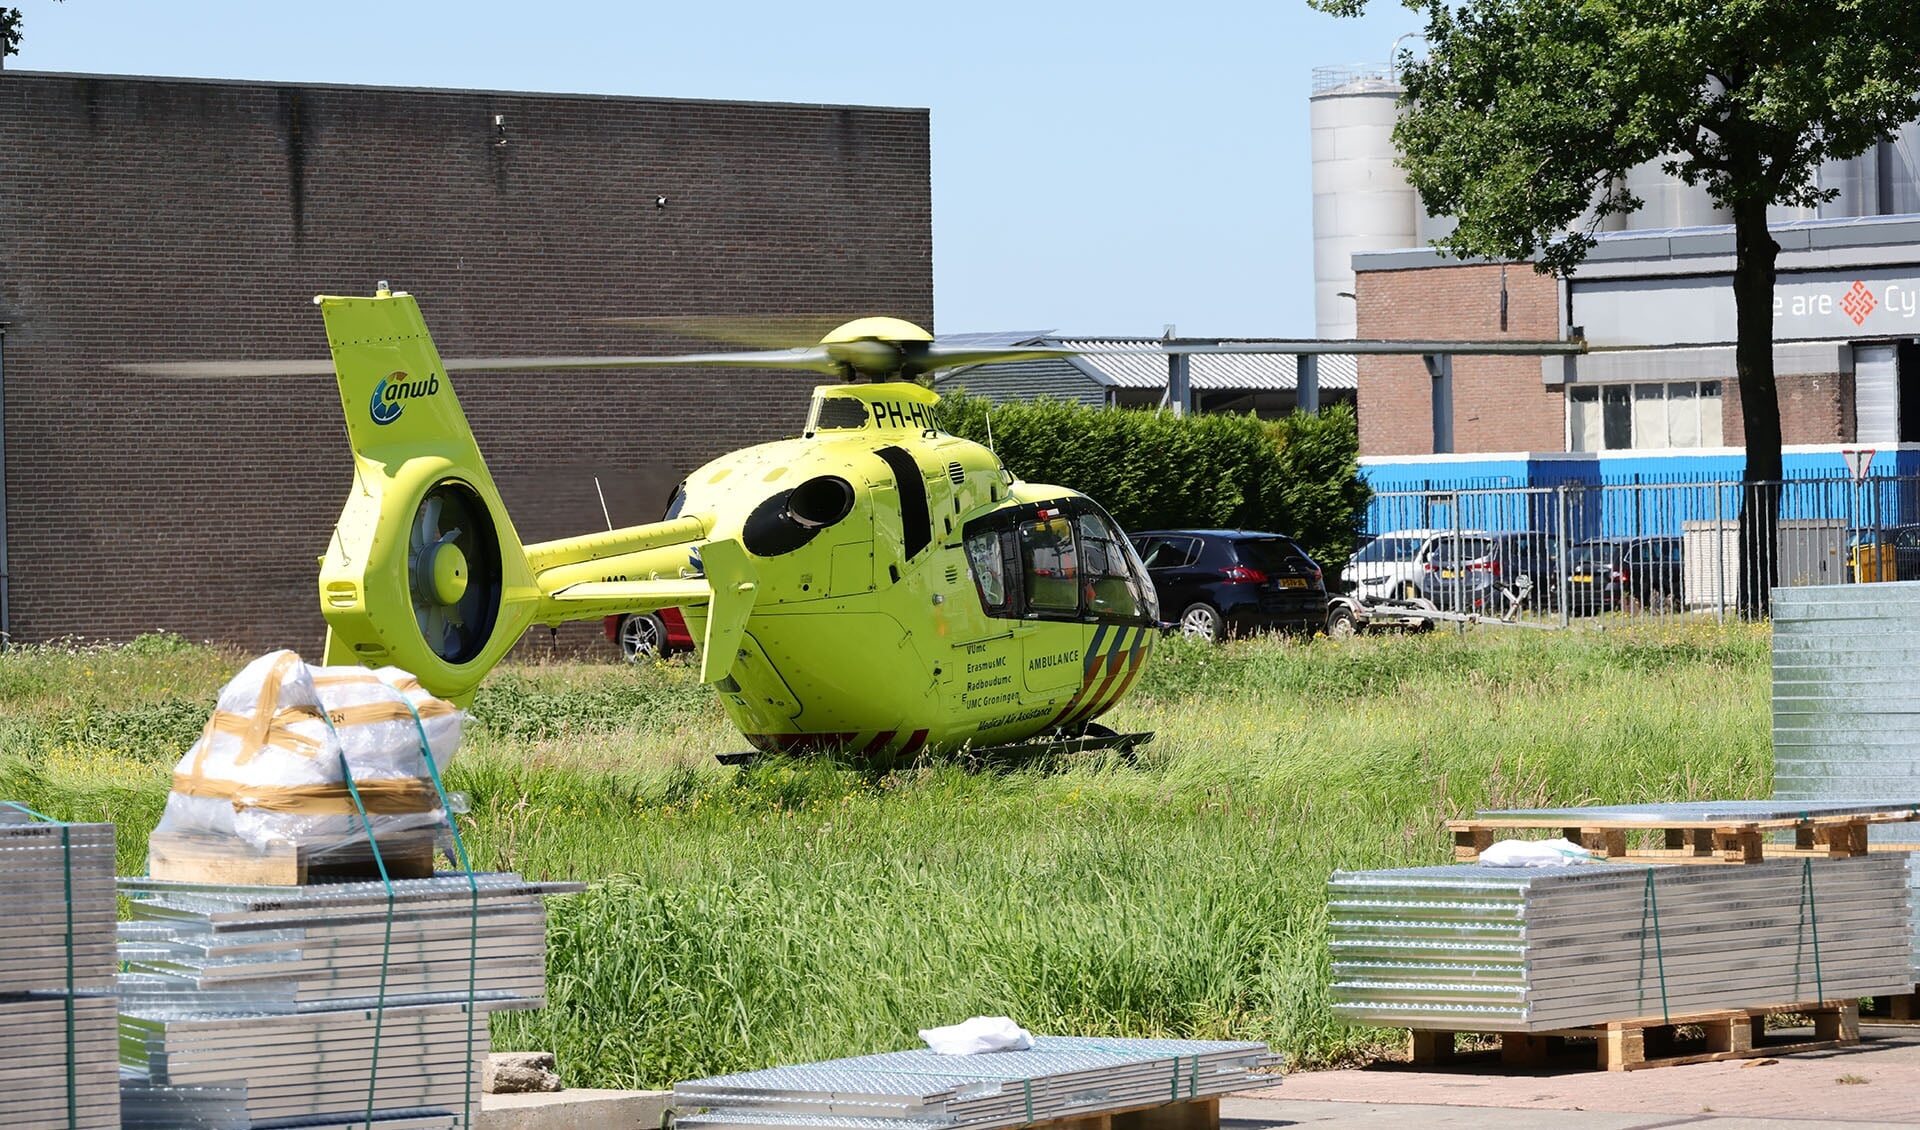 Traumahelikopter bij bedrijf aan de Reggestraat. (Foto: Charles Mallo, Foto Mallo)